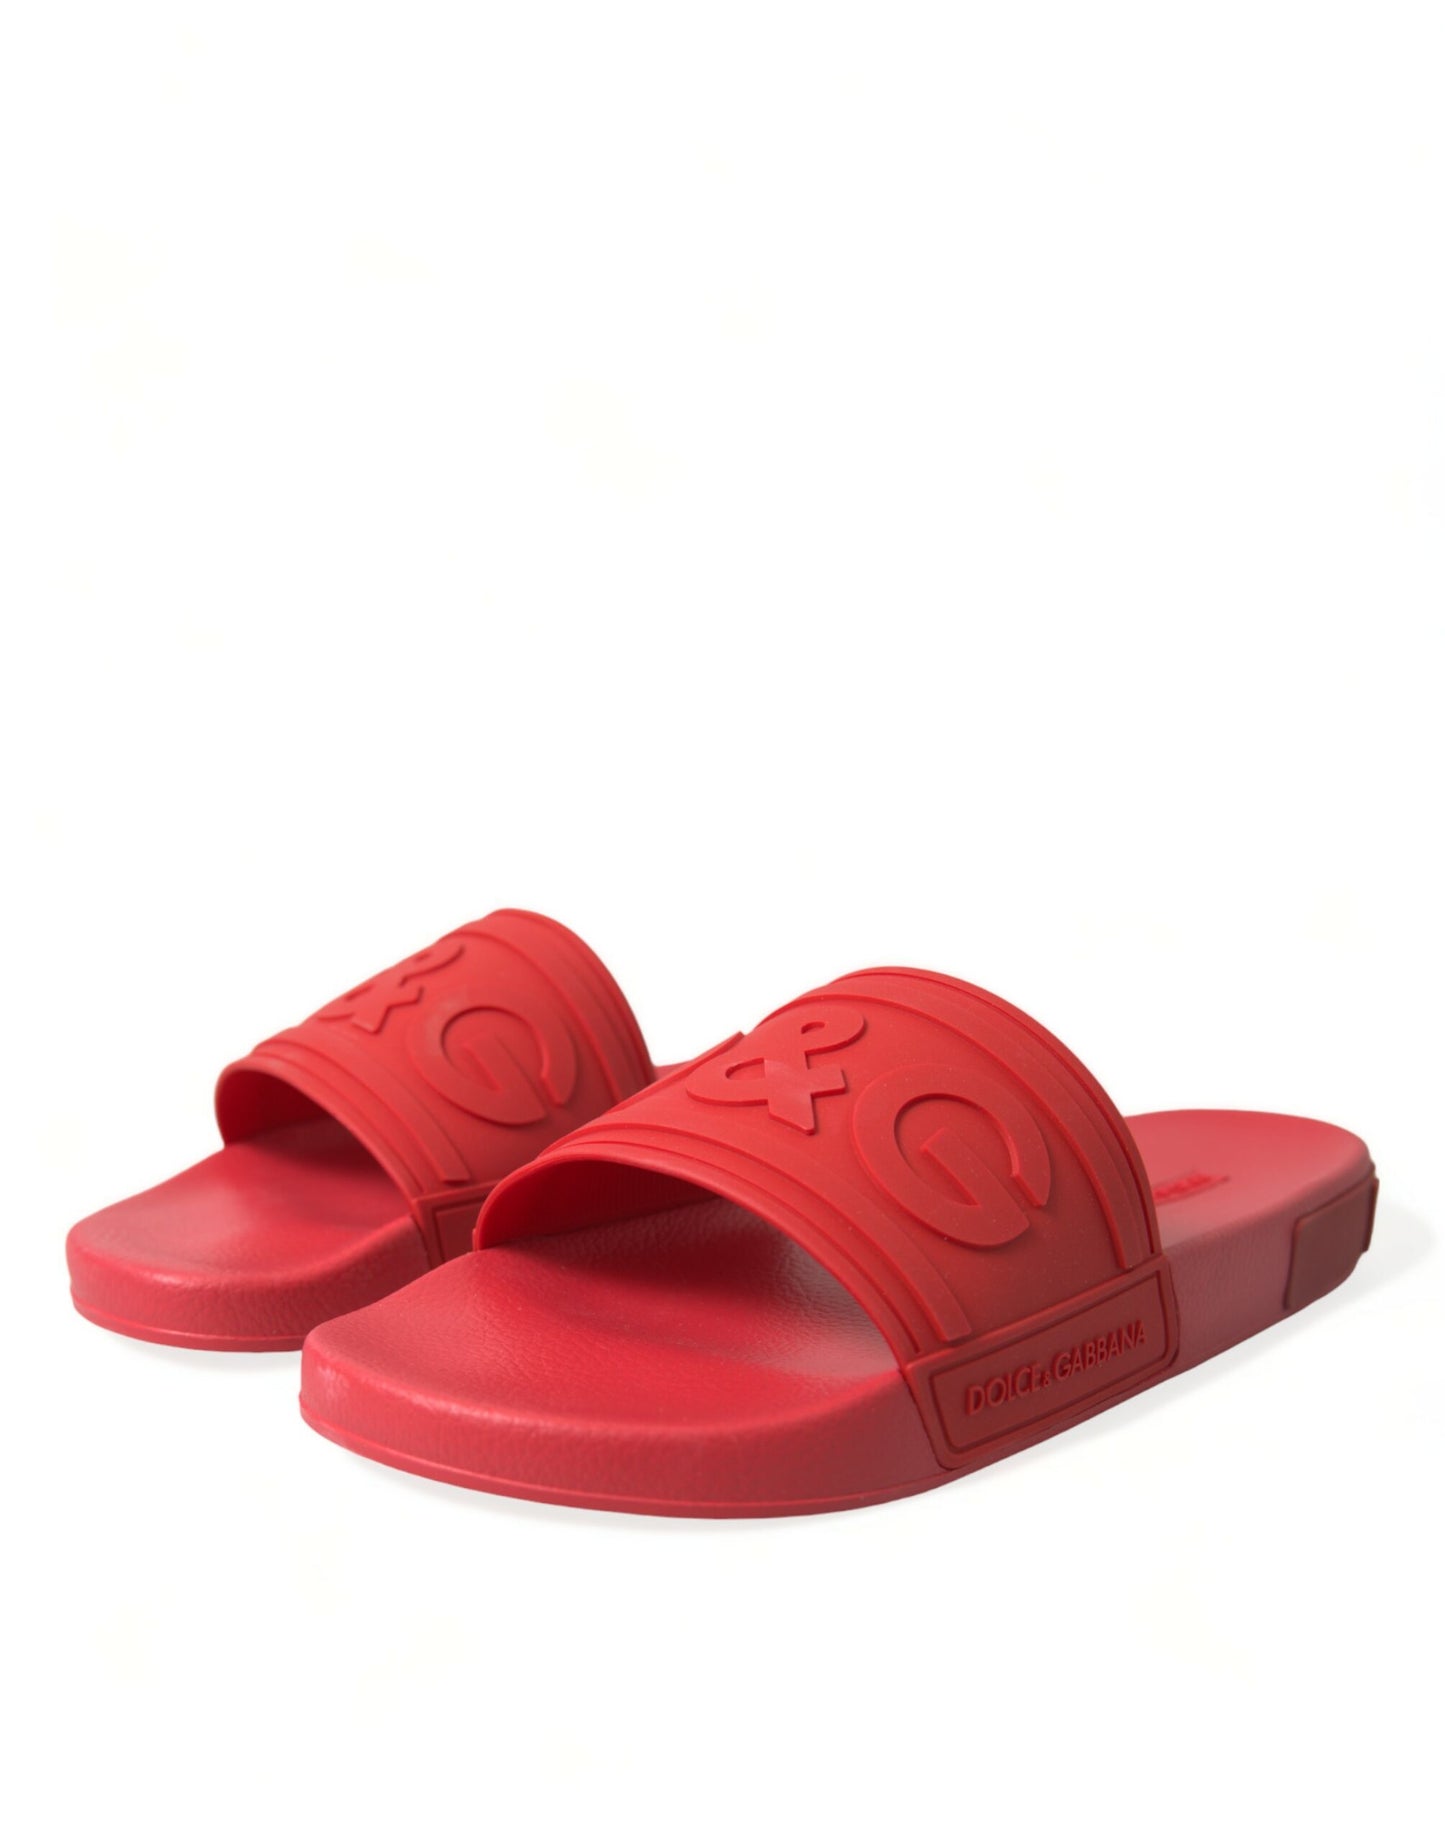 Dolce & Gabbana Classic Red Rubber Beachwear Slides